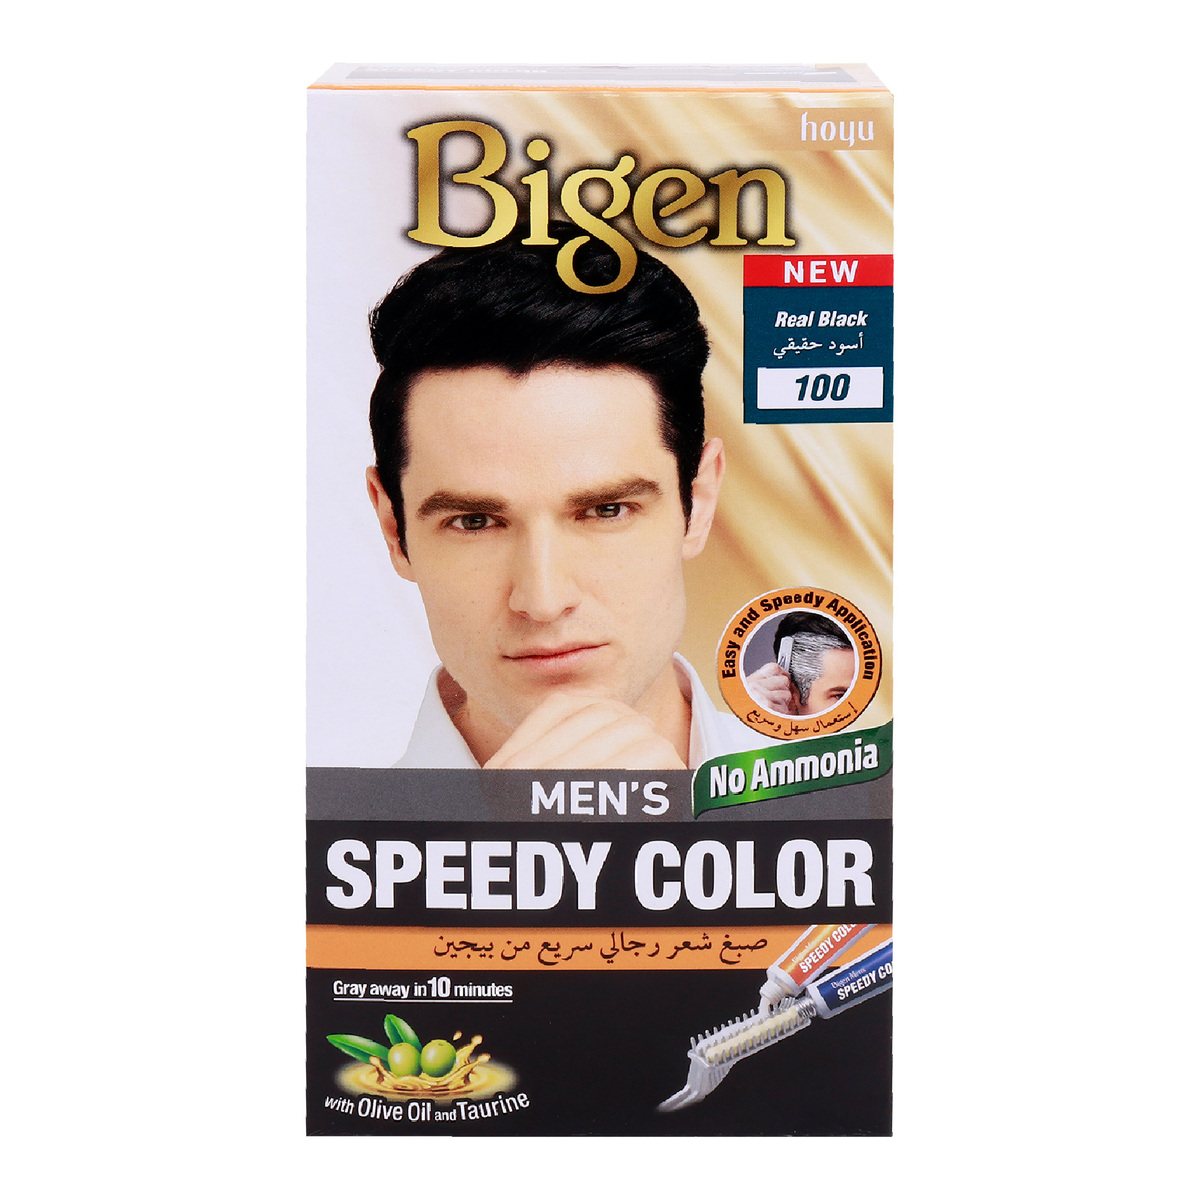 Bigen Men's Speedy Color Real Black 100, 1 pkt